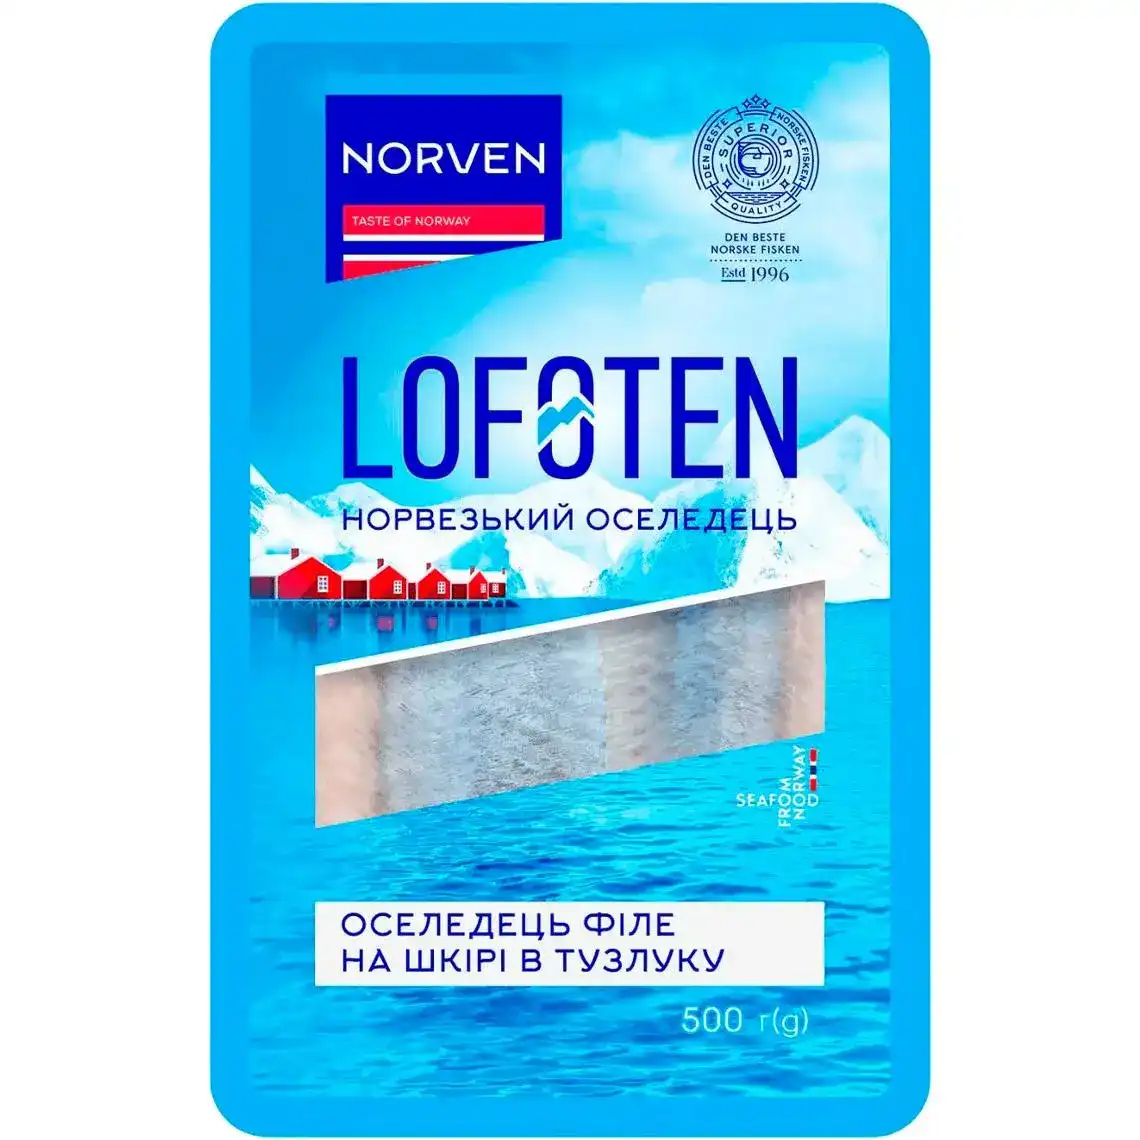 Оселедець Norven філе-шматочки слабосолона в олії філе 500 г